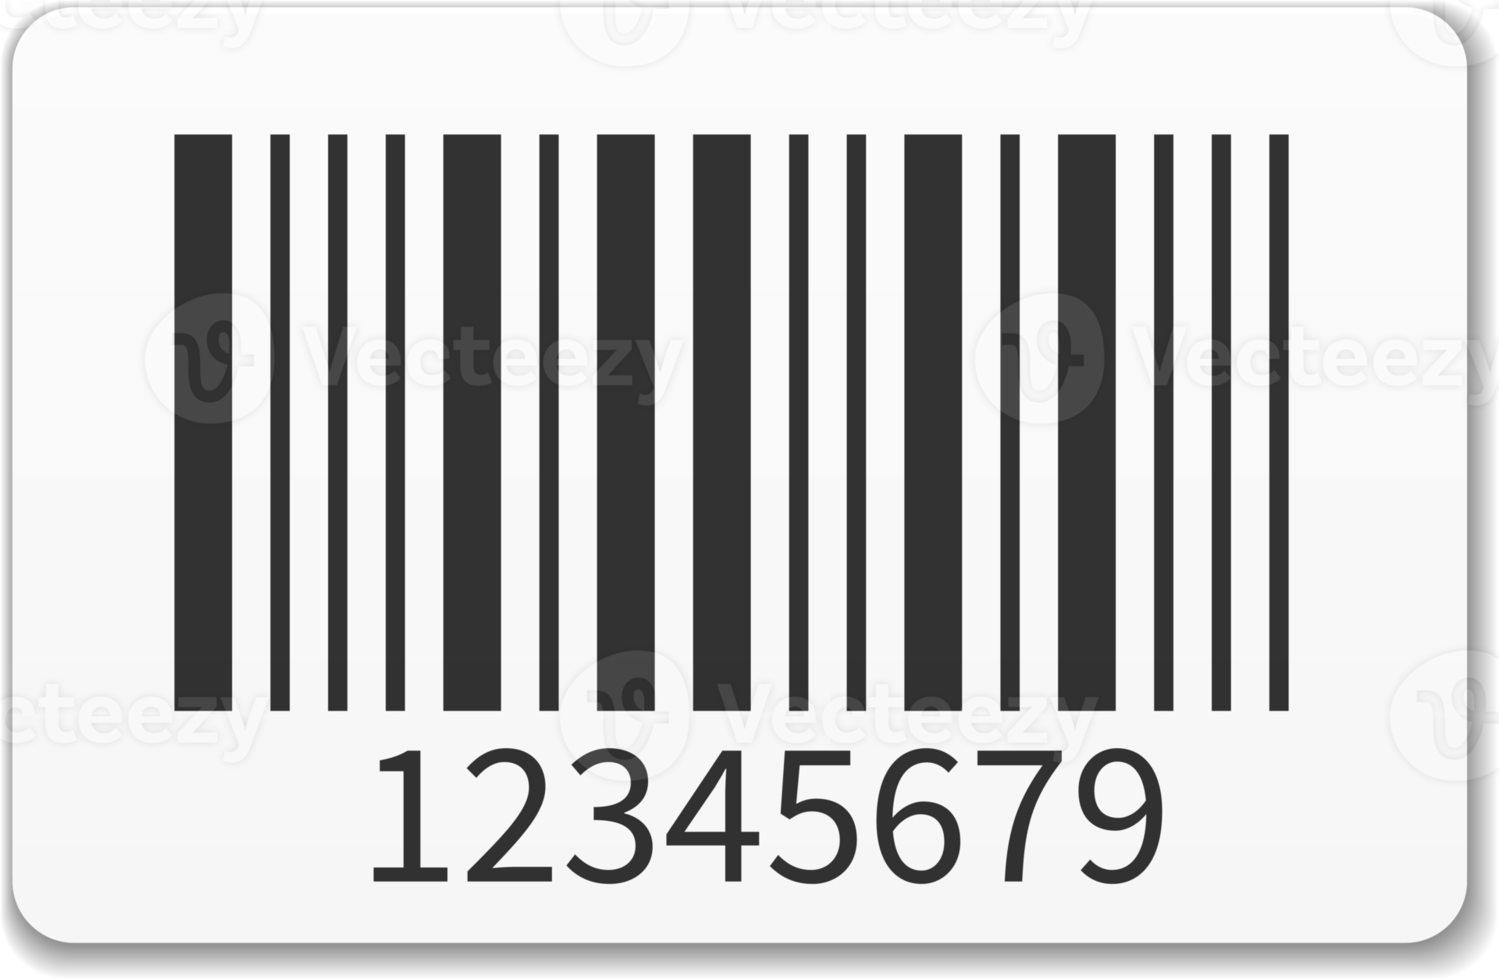 Abbildung des Barcode-Etiketts png